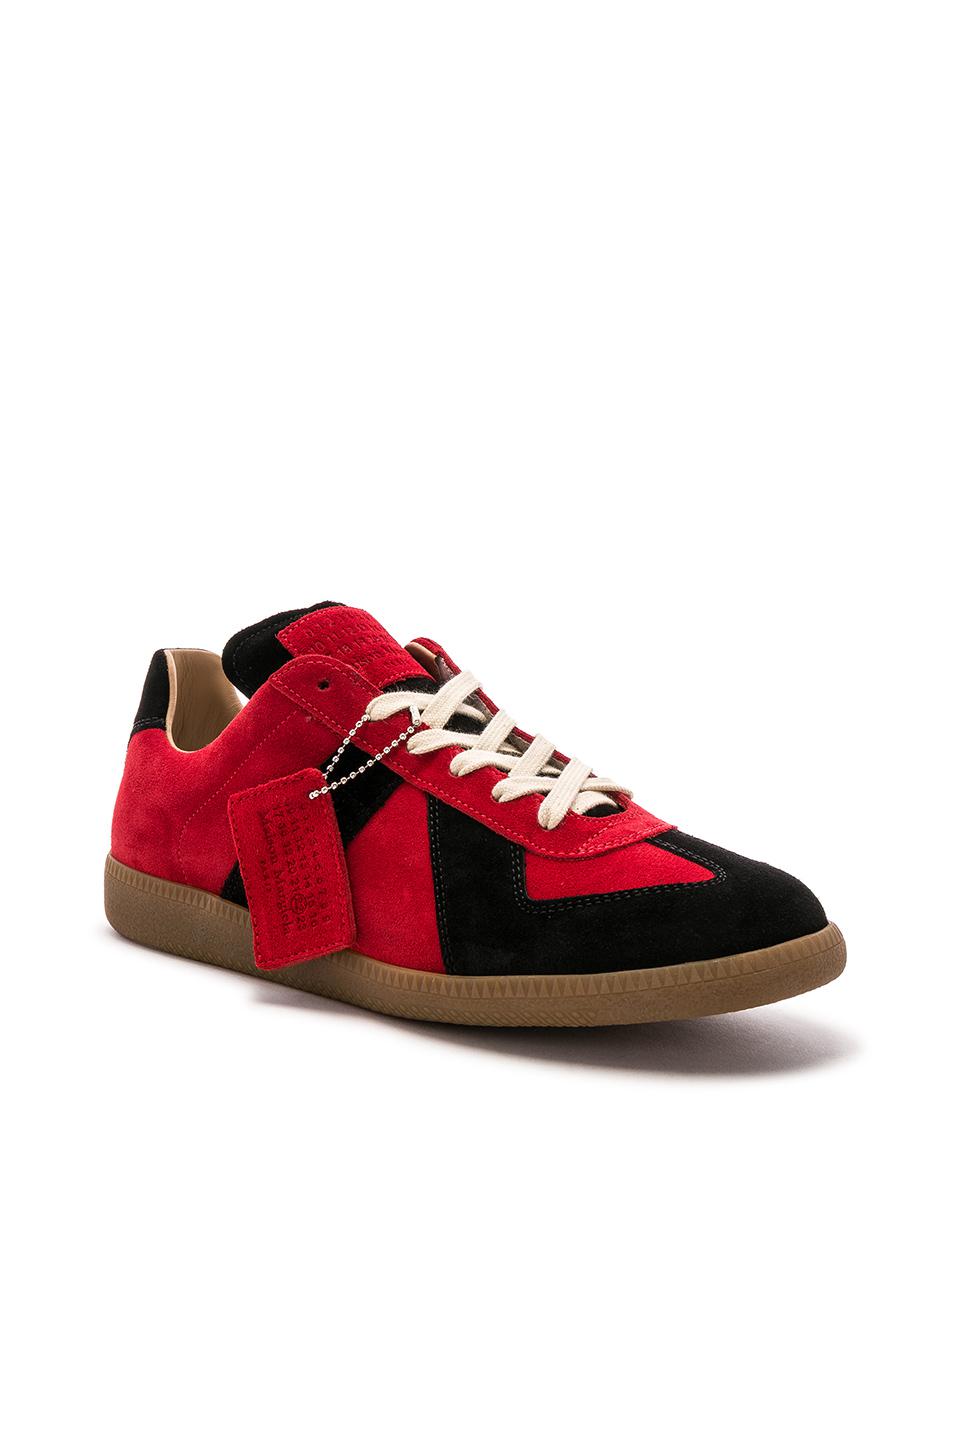 Maison Margiela Suede Replica Sock Sneakers in Red for Men - Lyst